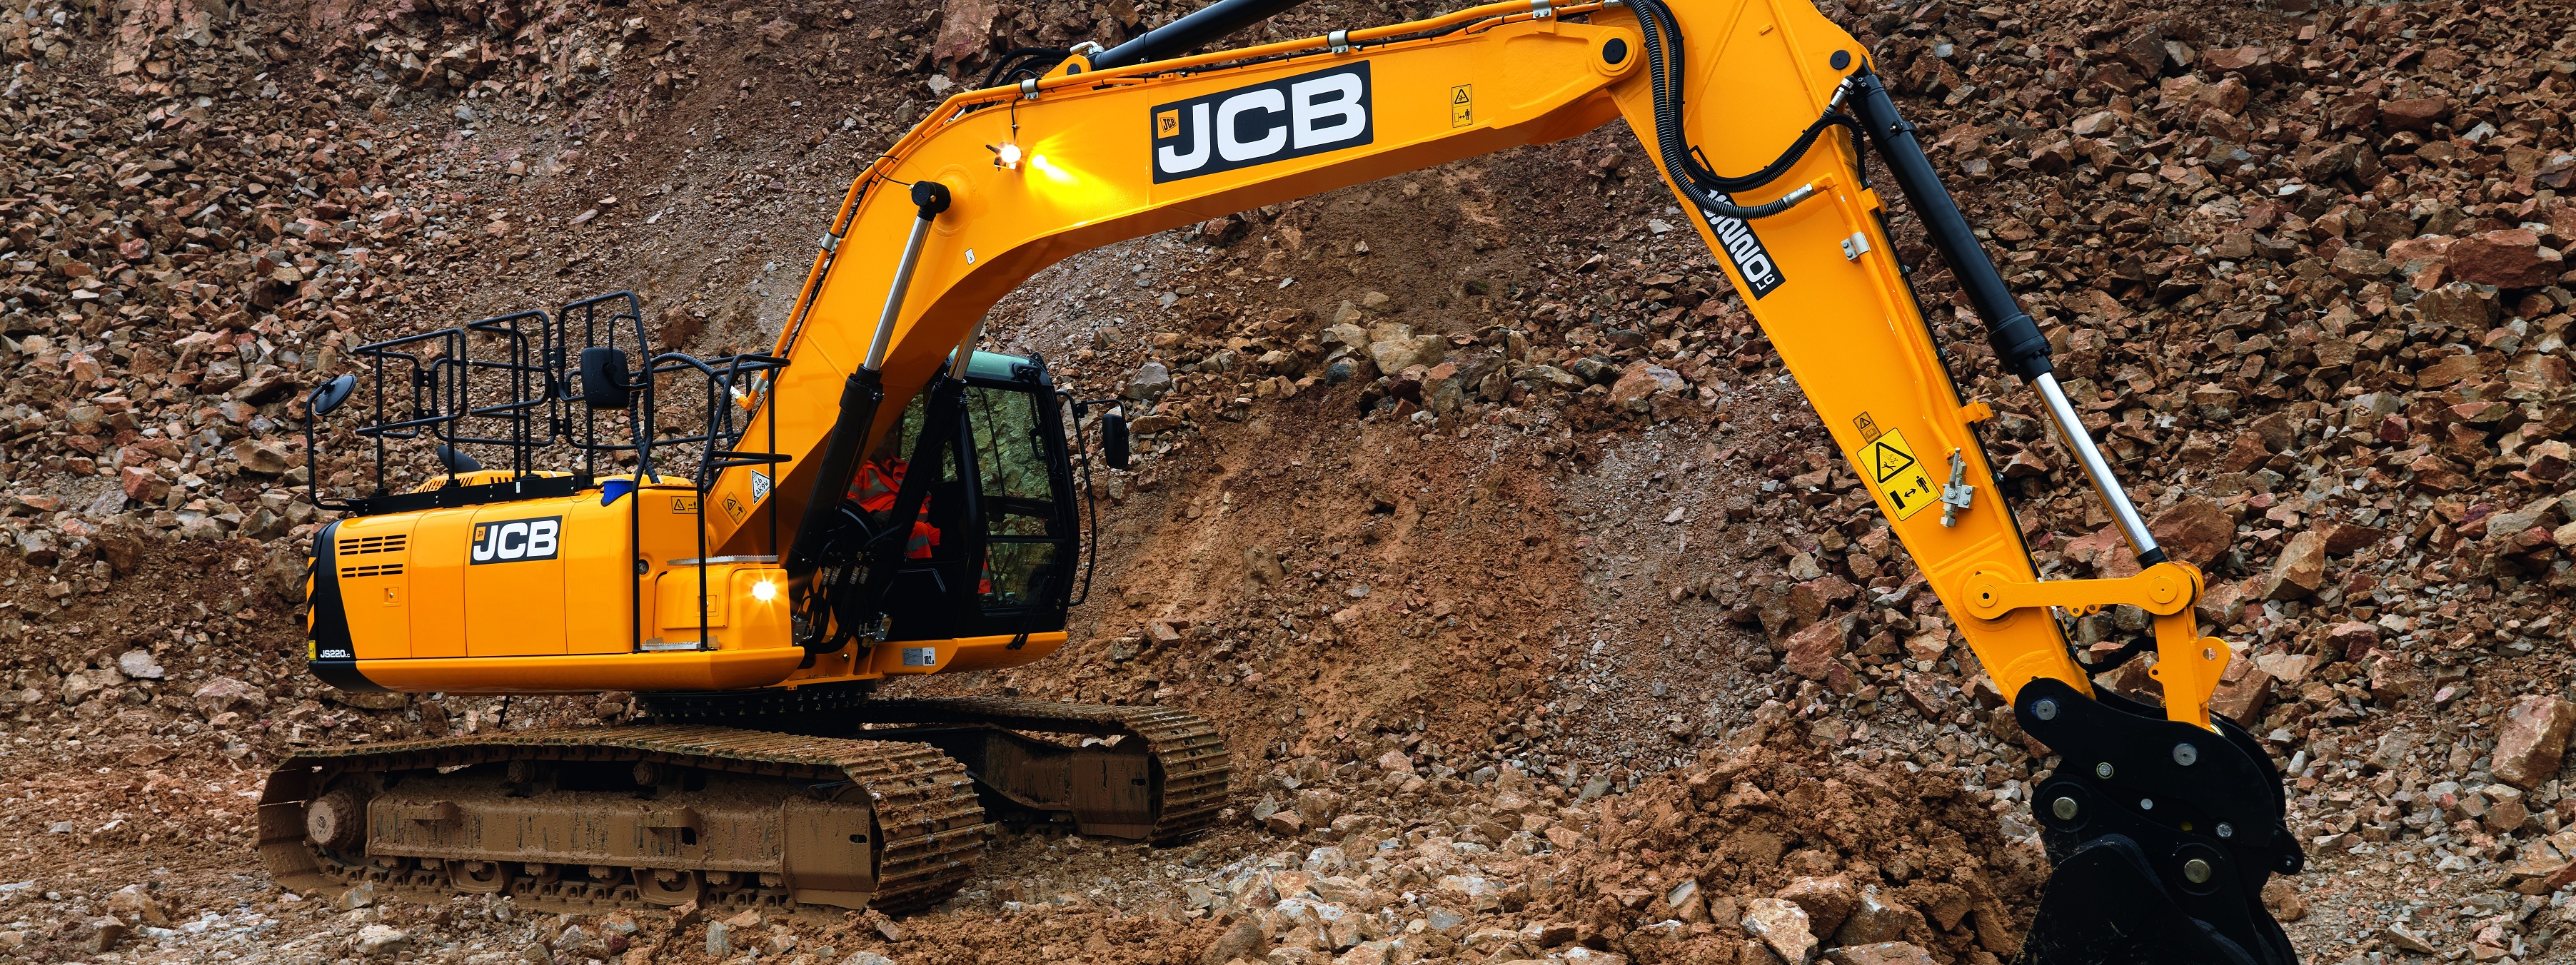 22 tonne excavator for sale